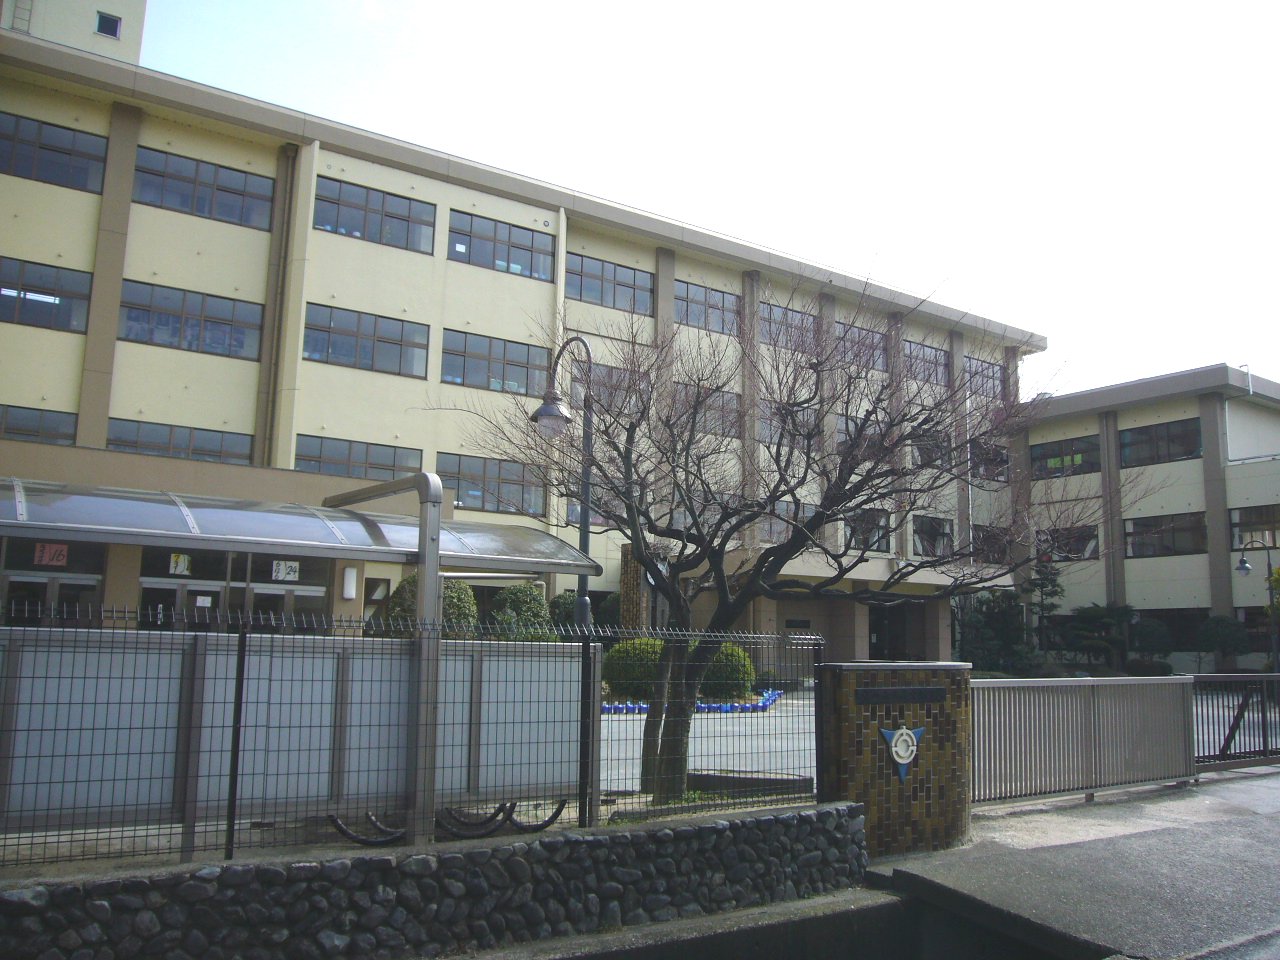 Primary school. Yoshimi up to elementary school (elementary school) 370m